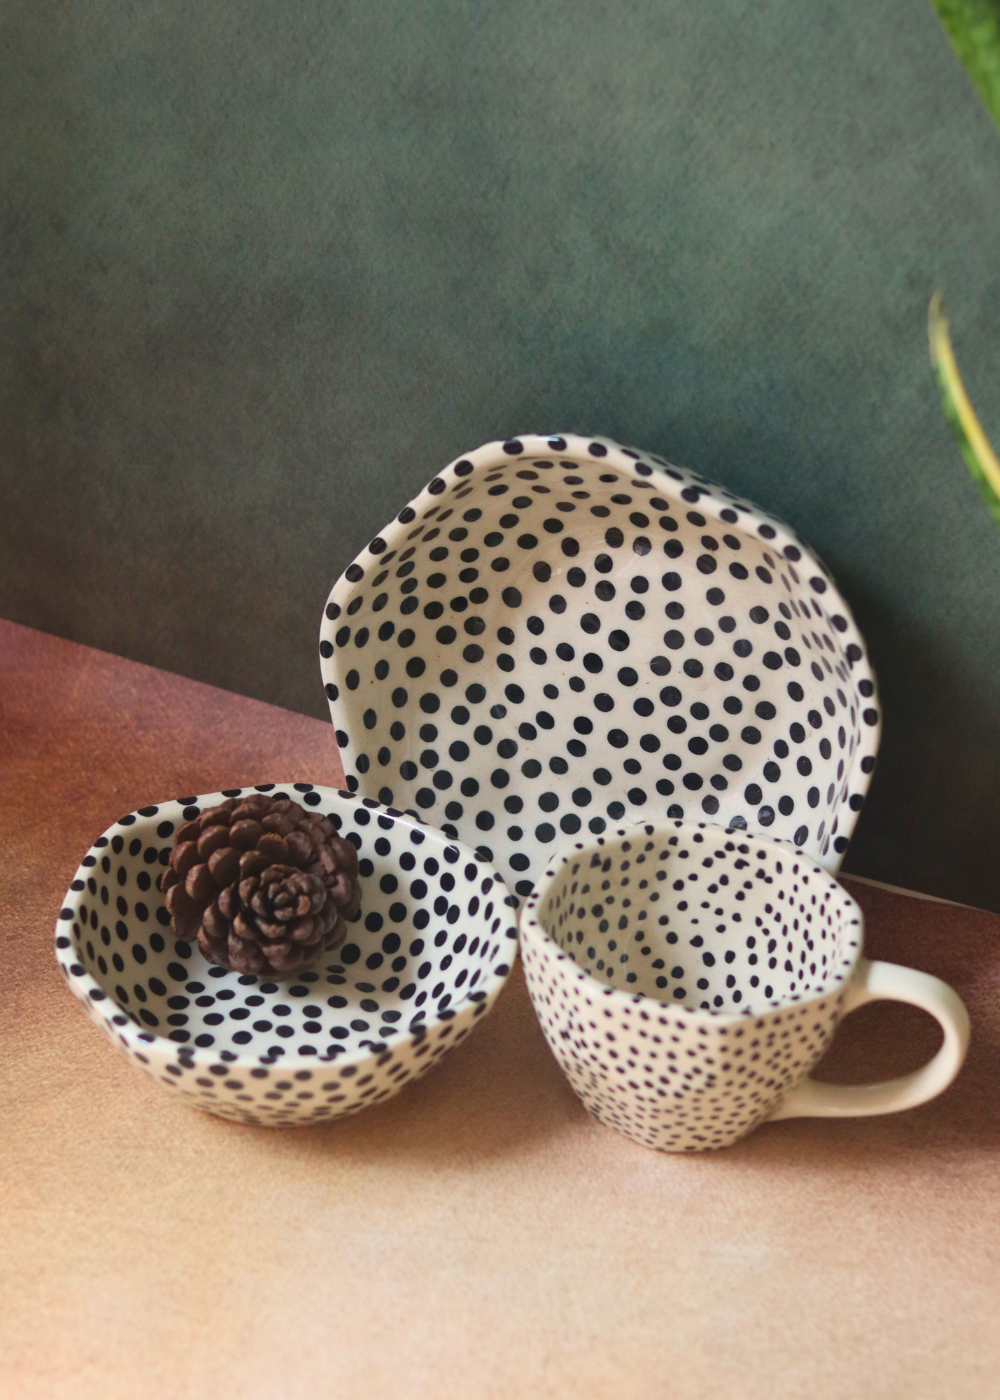 Stunning black & white bowls & coffee mug